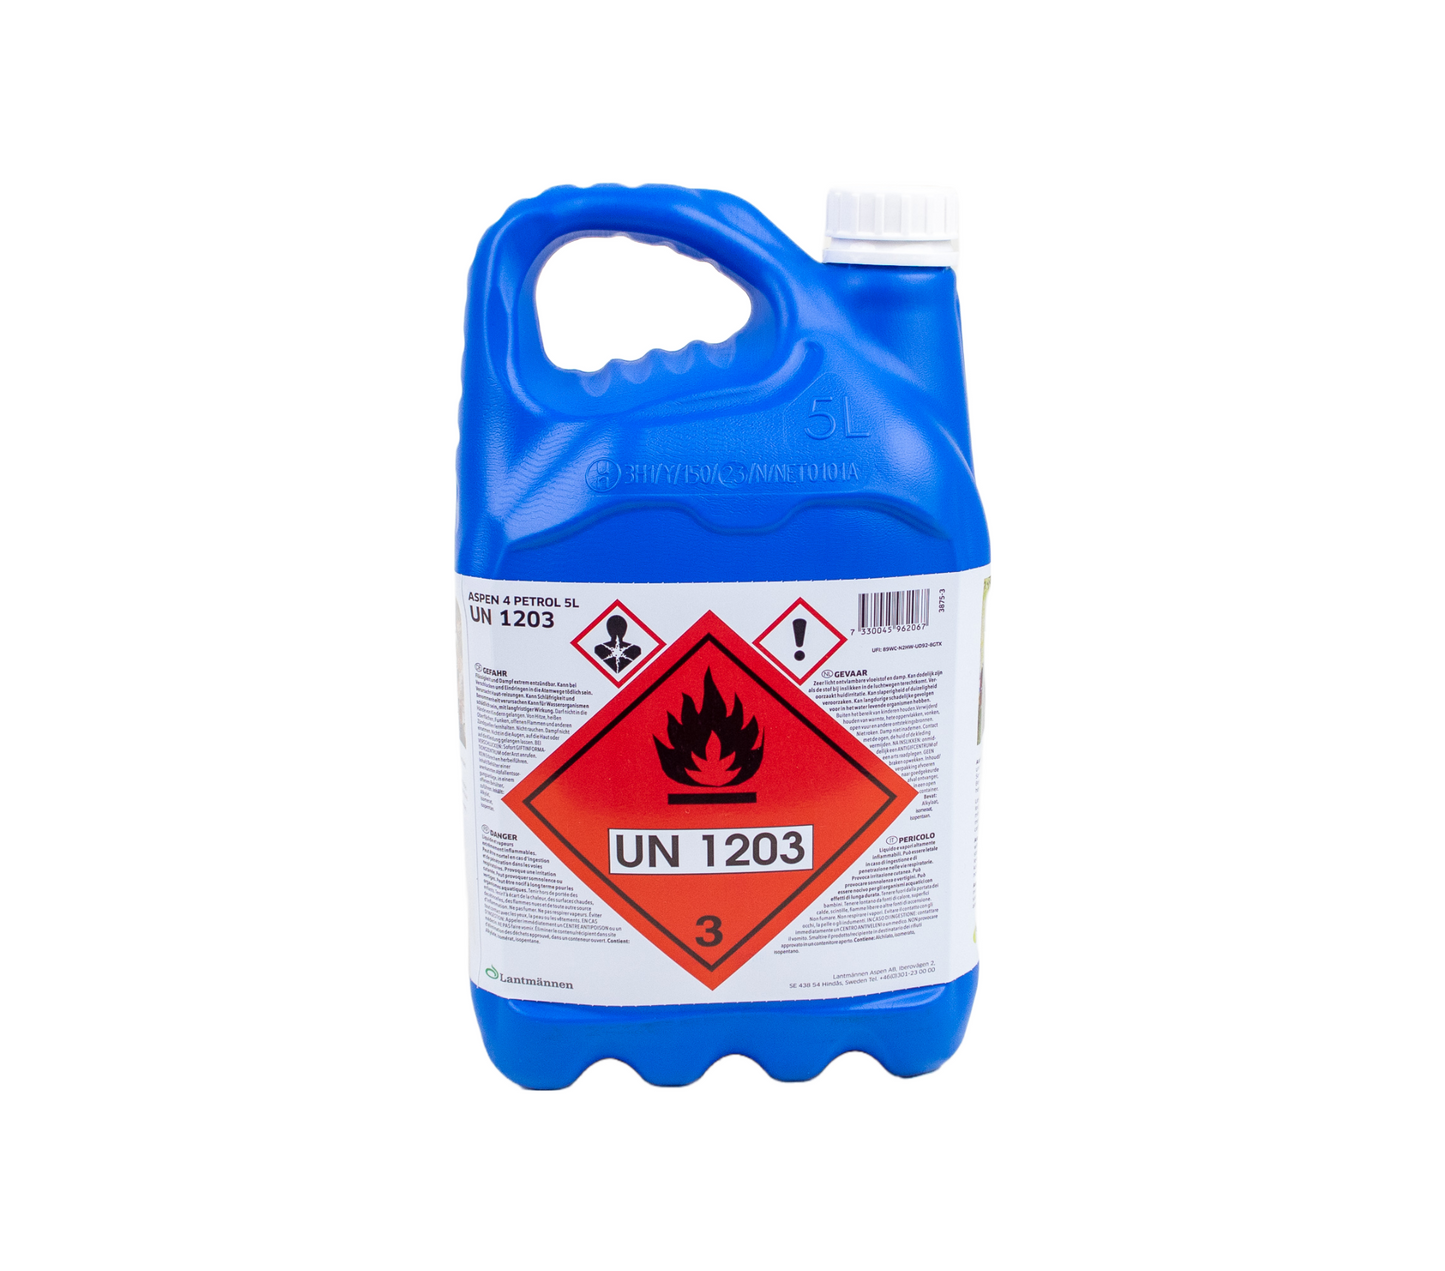 Aspen 4T Alkylatbenzin - 5 Liter